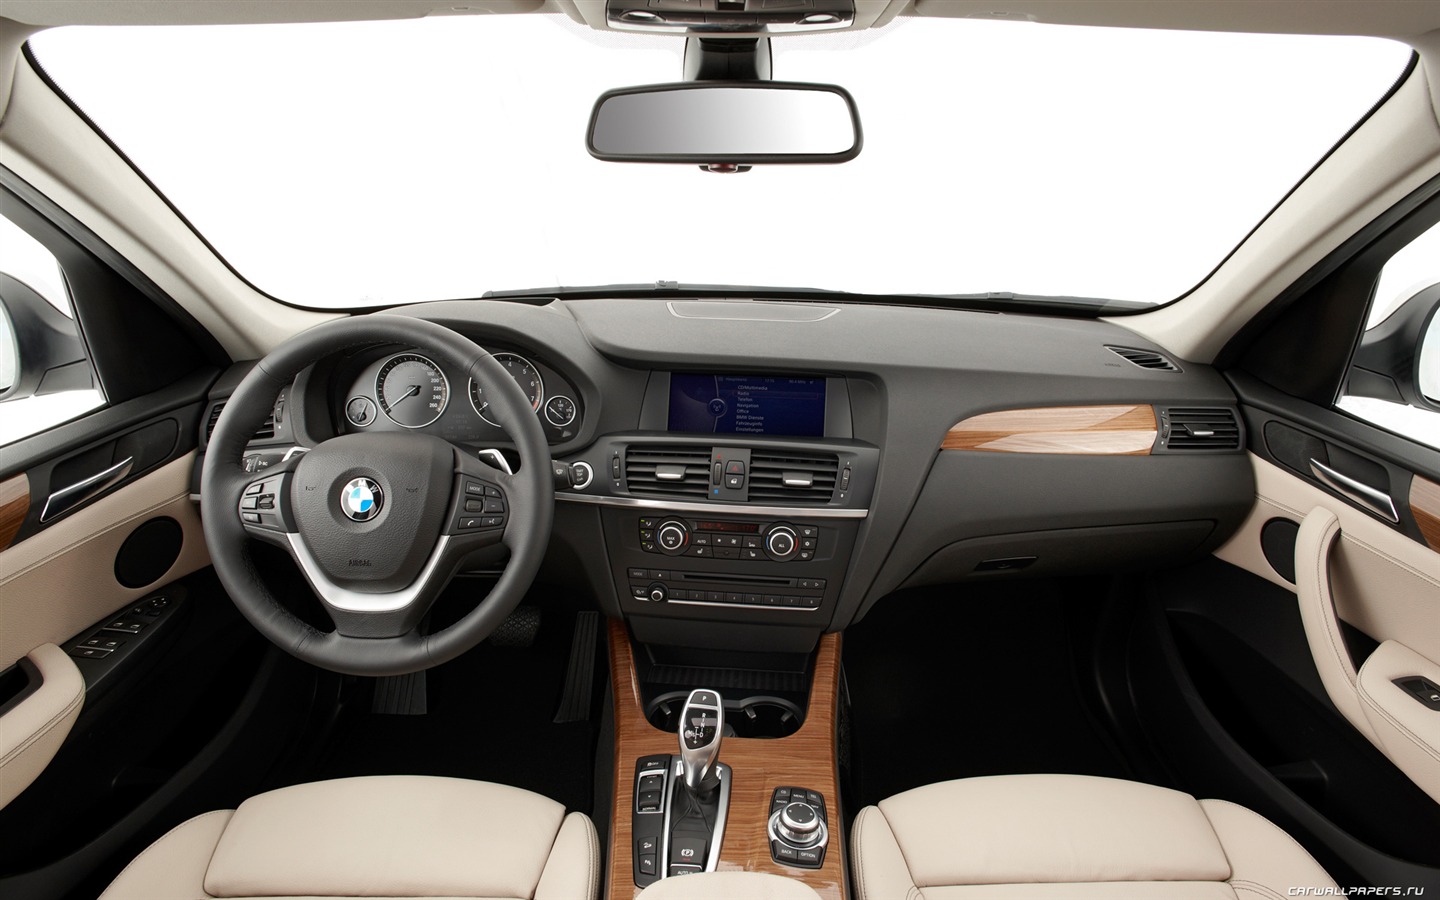 BMW X3 xDrive35i - 2010 寶馬(一) #39 - 1440x900